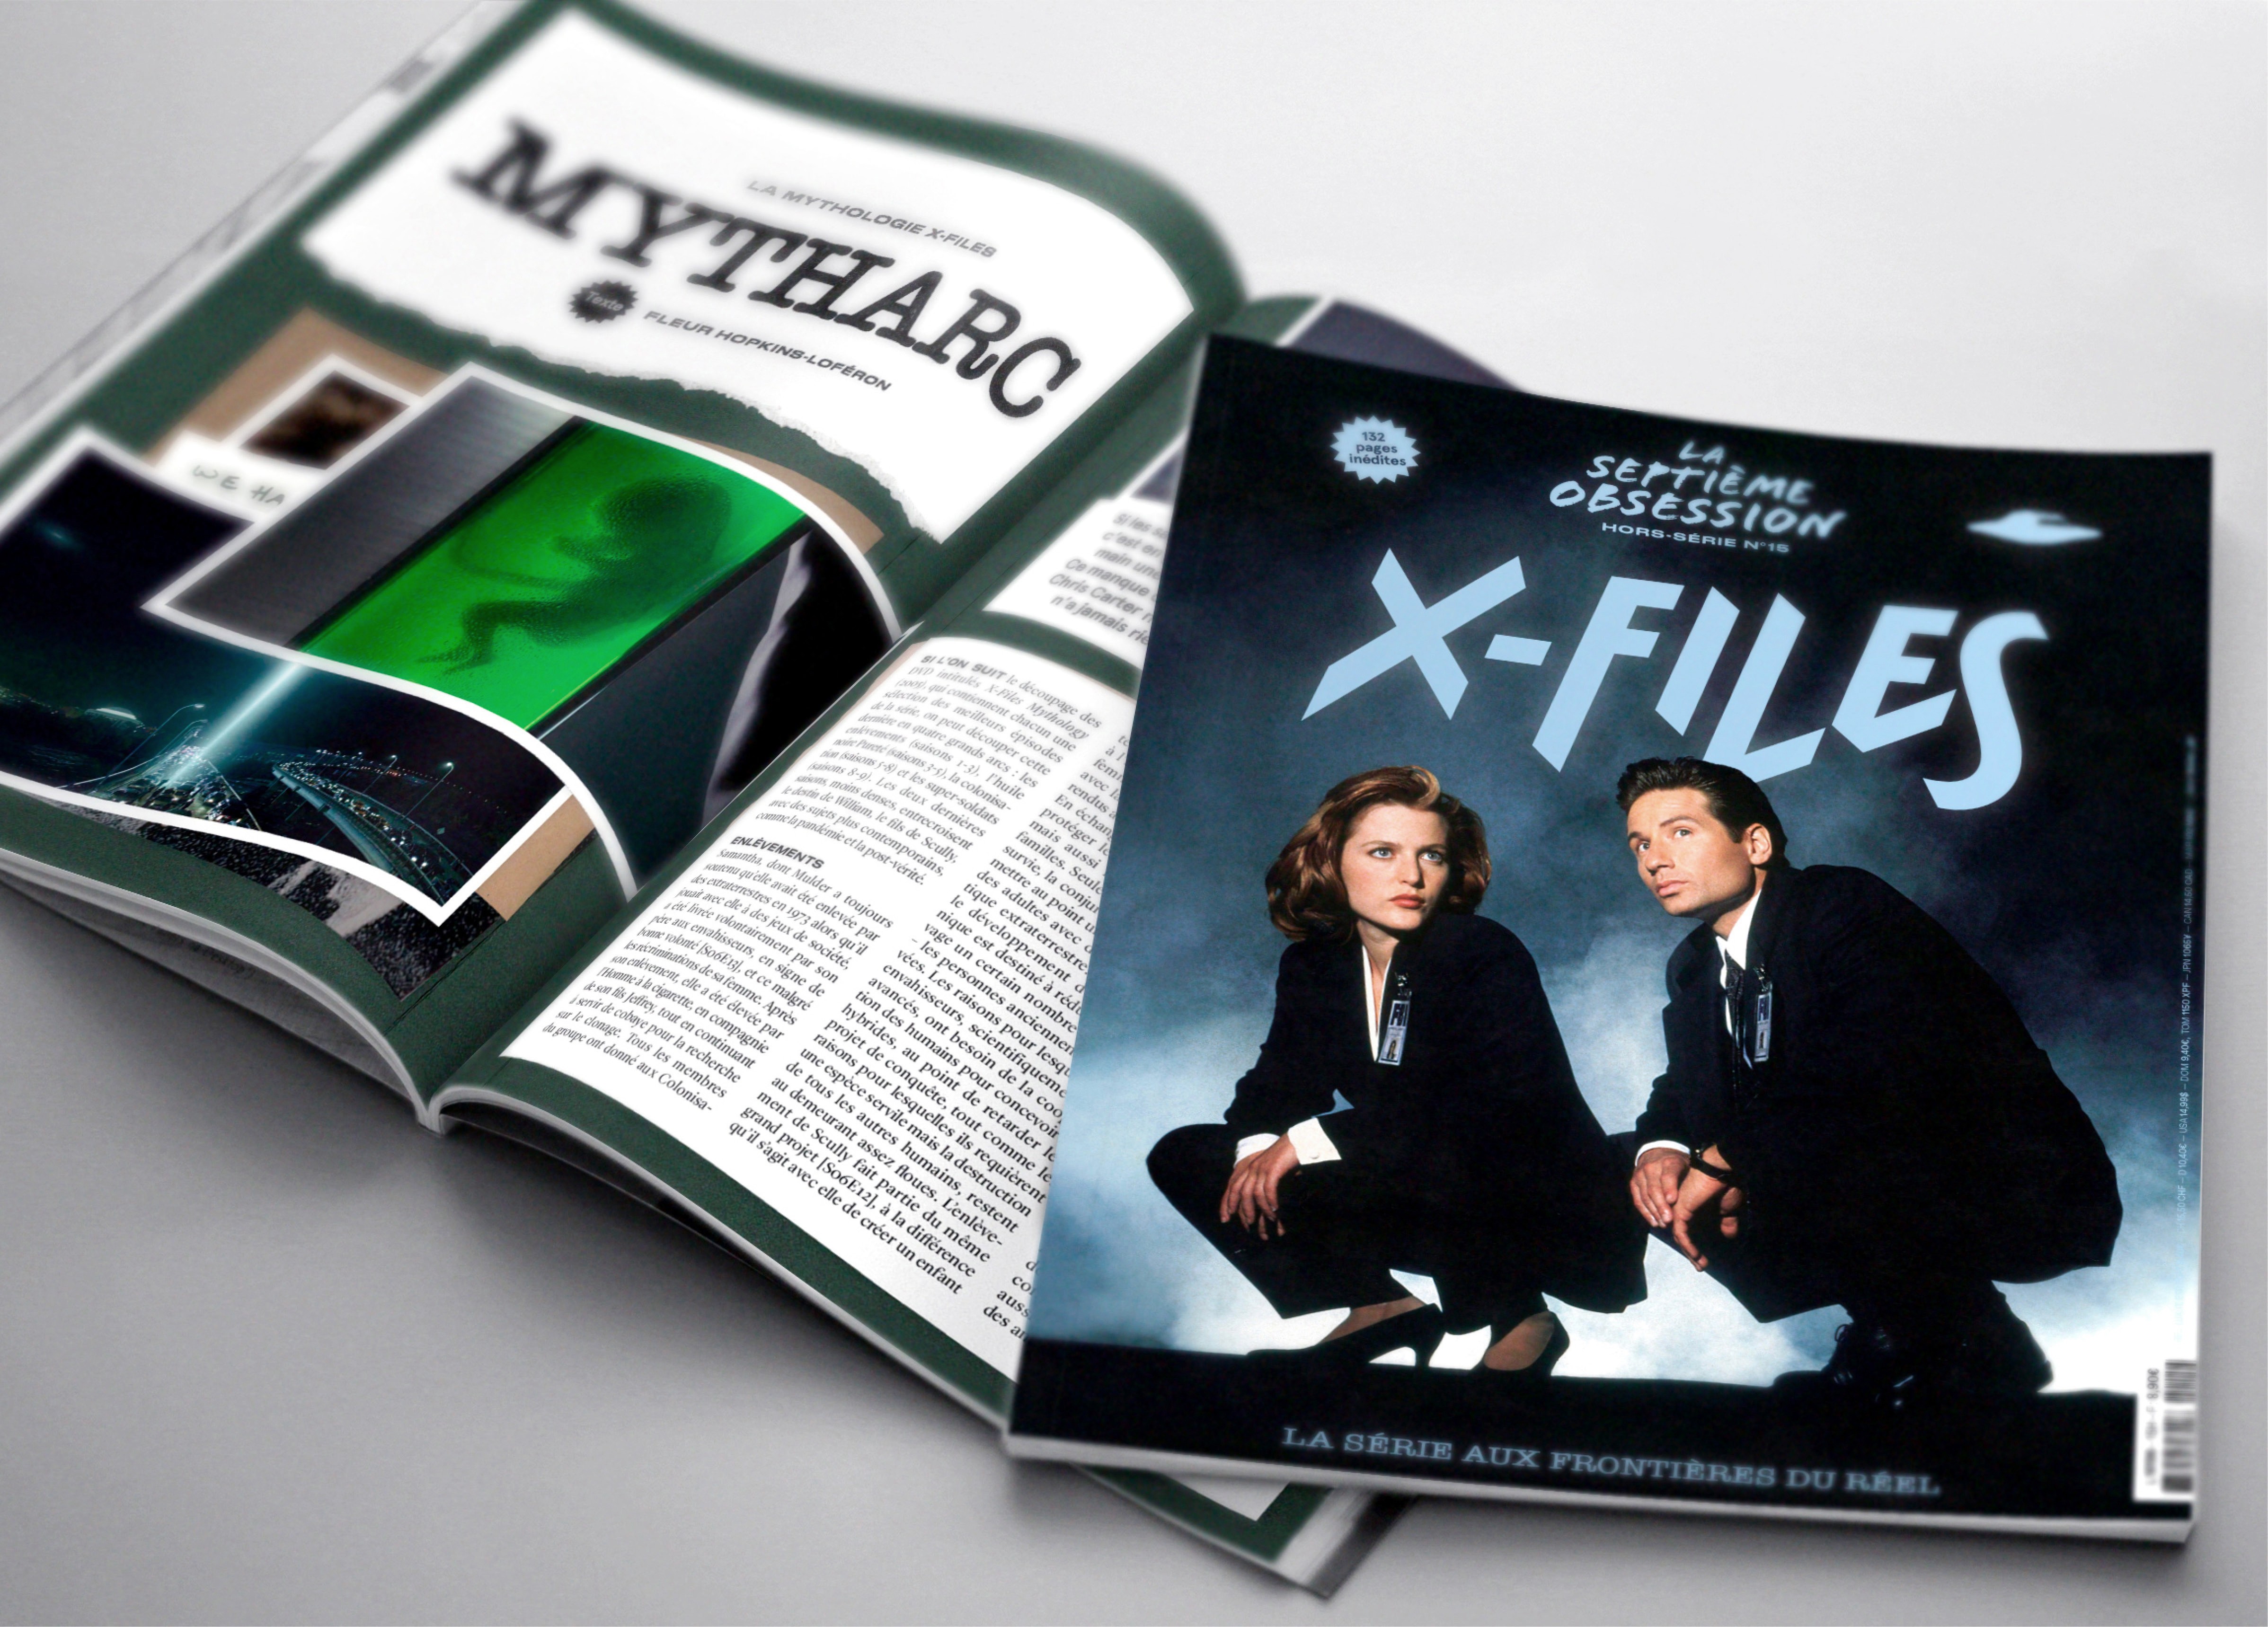 La Septieme Obsession Special issue 15 - X-Files